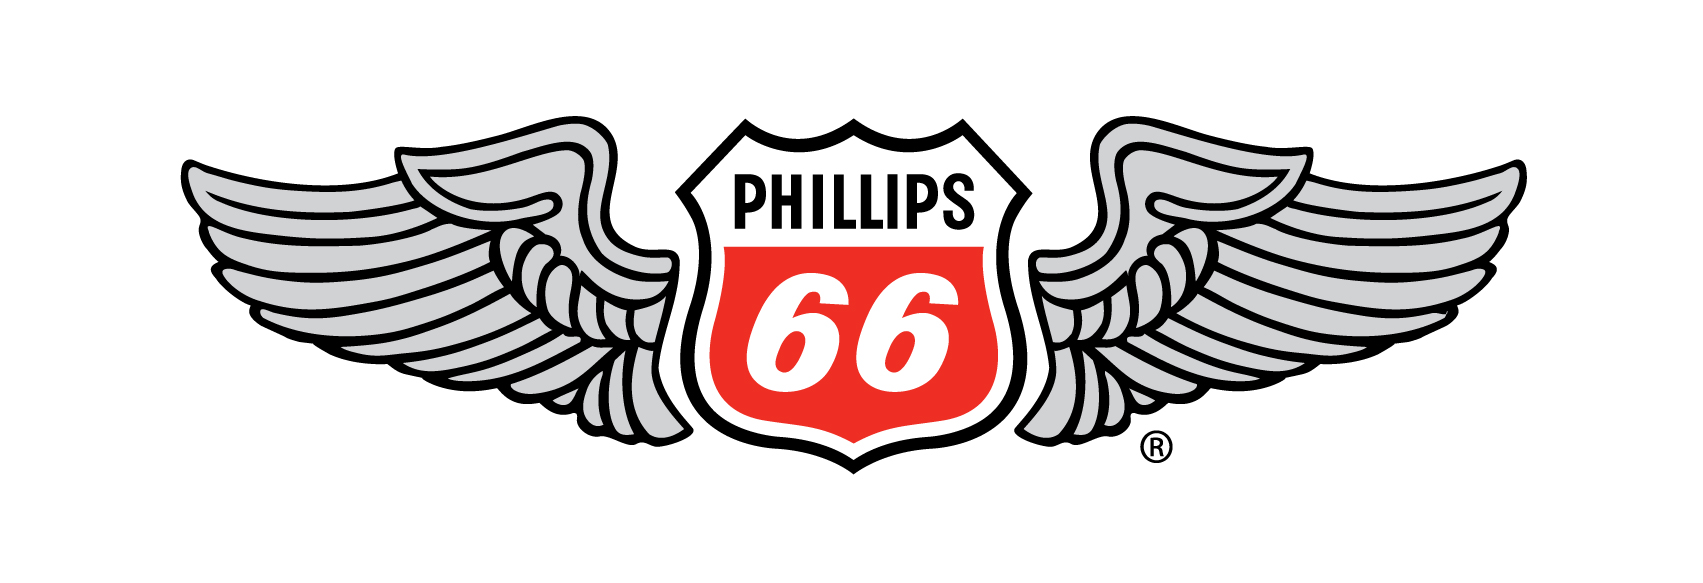 phillips-66-aviation-logo.jpg